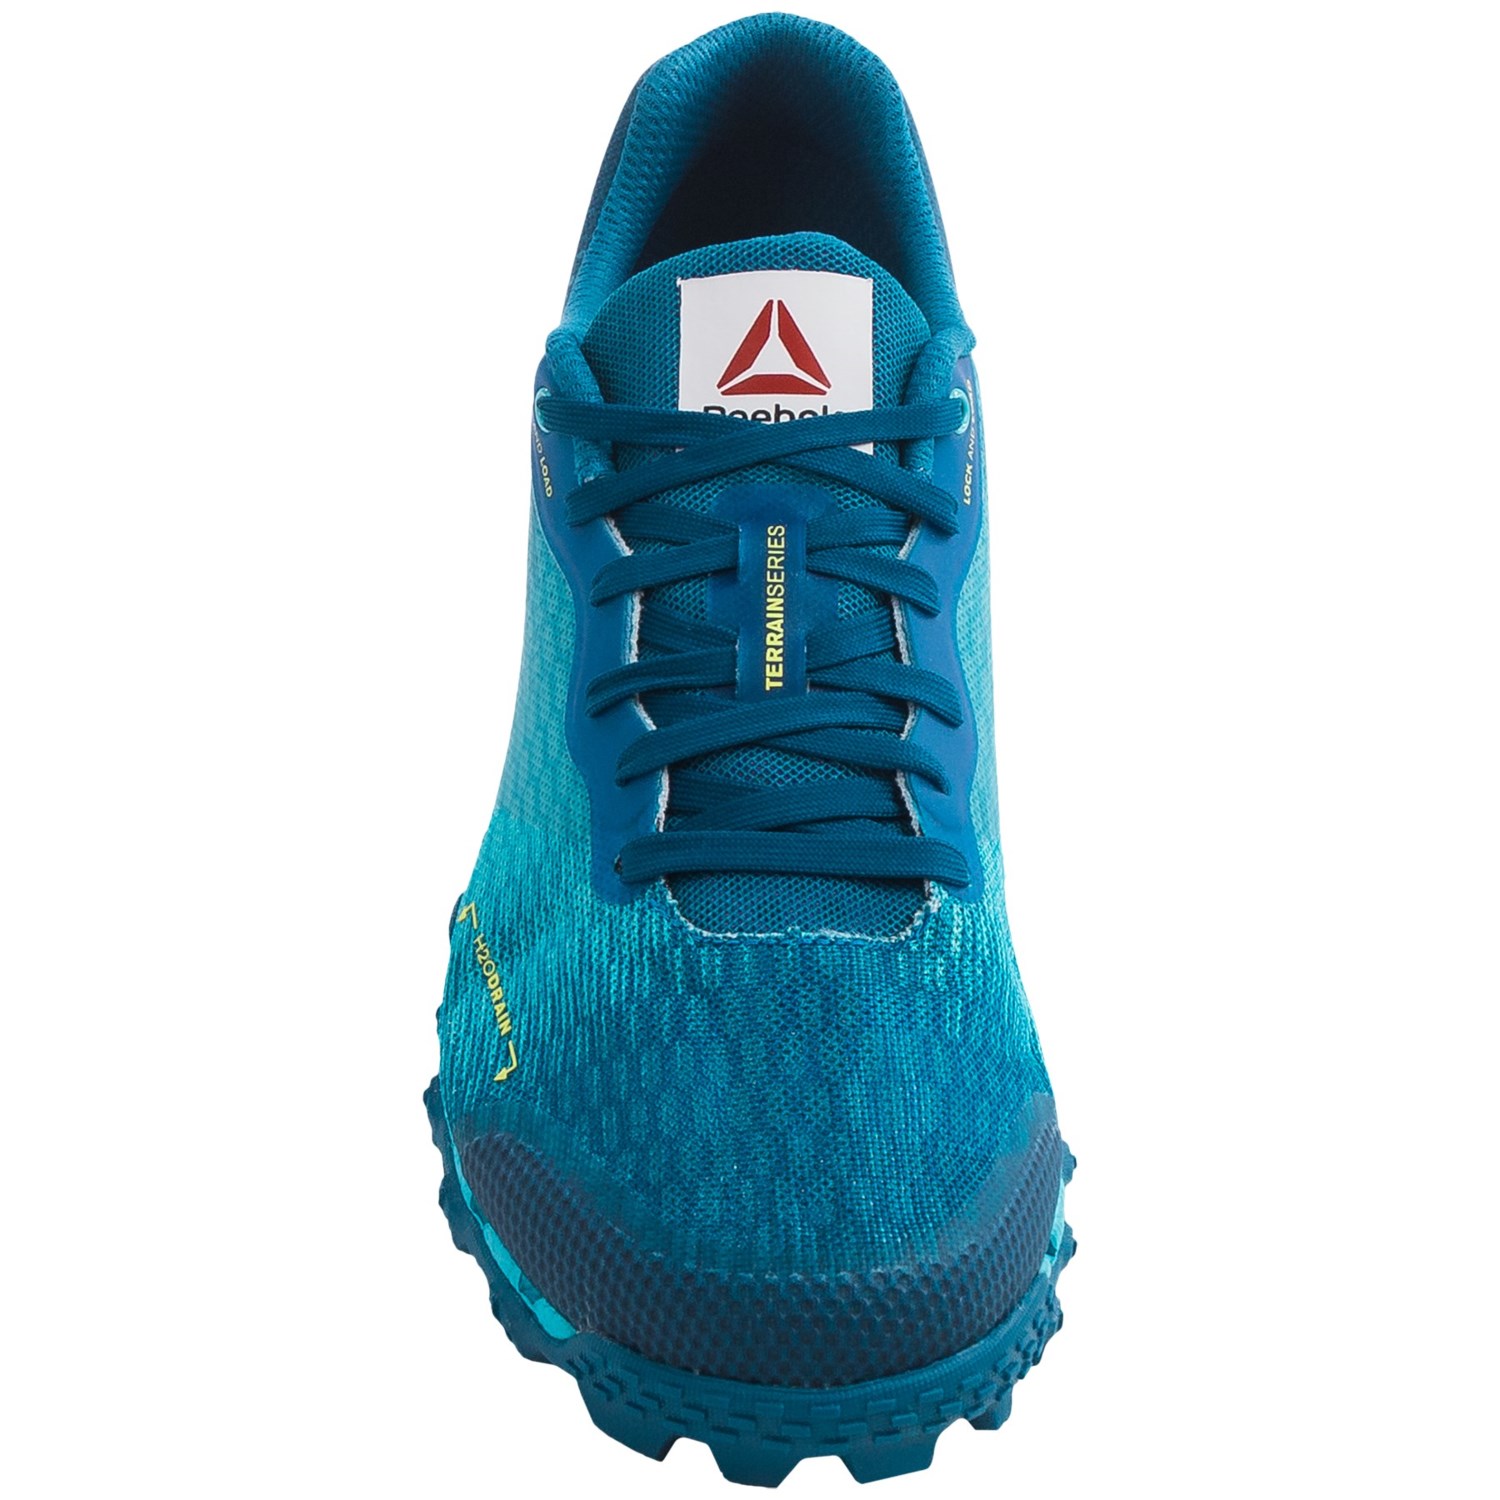 Reebok All Terrain Super 2.0 Trail Running Shoes (For Women) - Save 41%